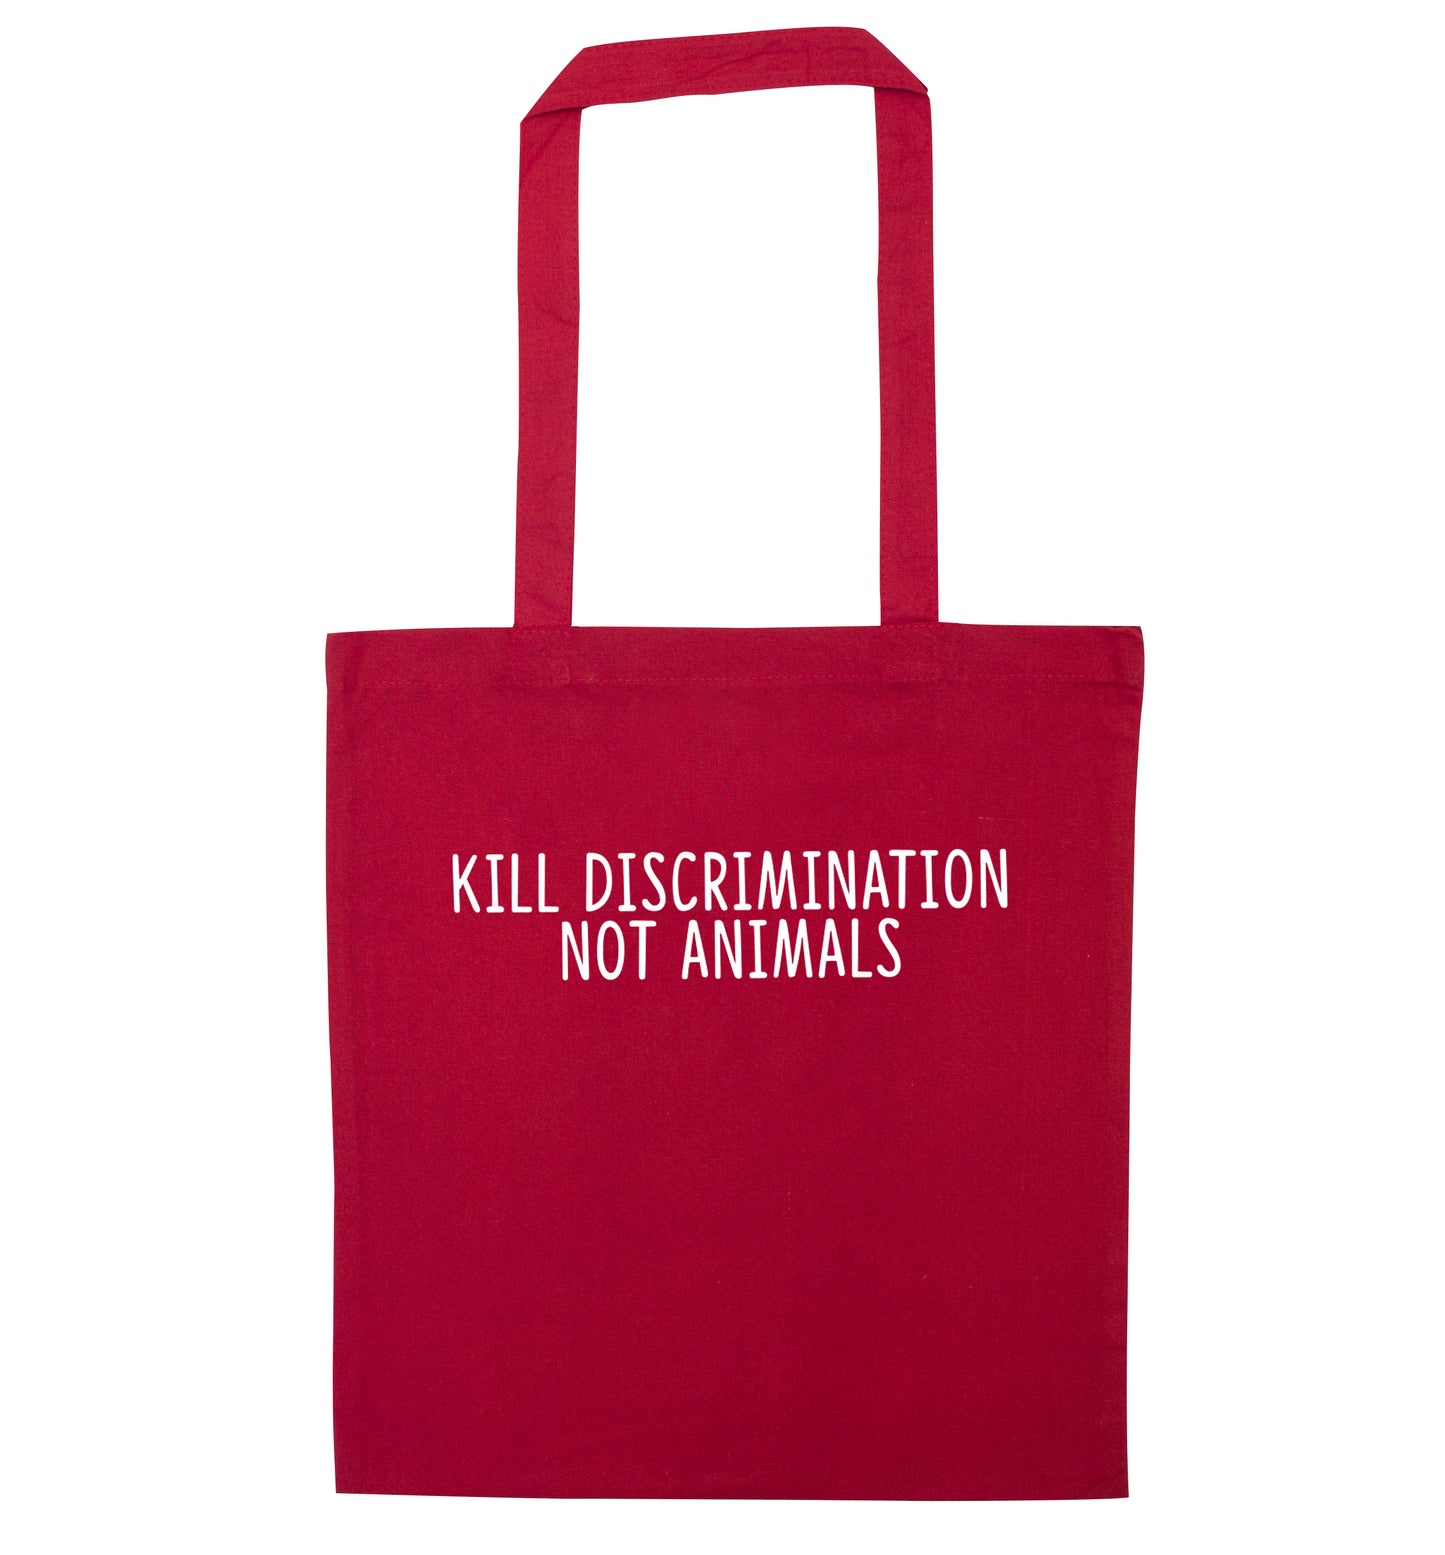 Kill Discrimination Not Animals red tote bag